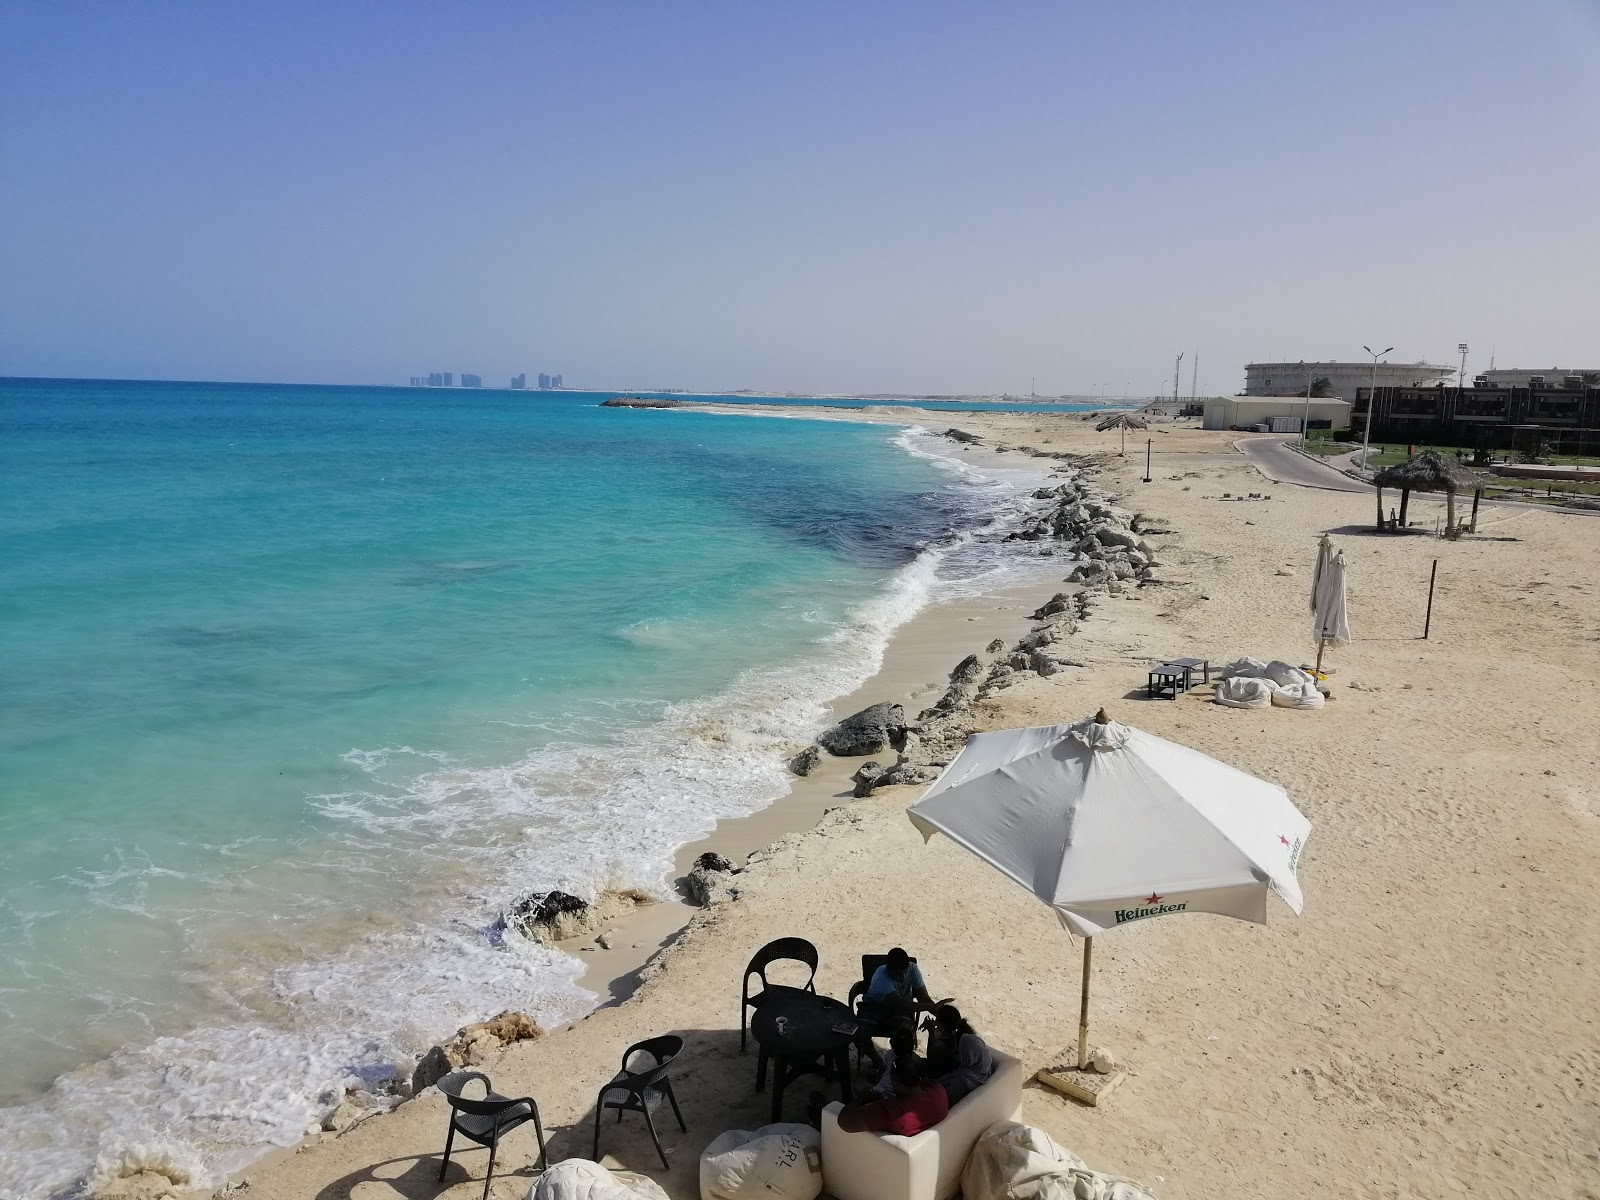 Foto di Al-Hamra Beach con una superficie del sabbia bianca